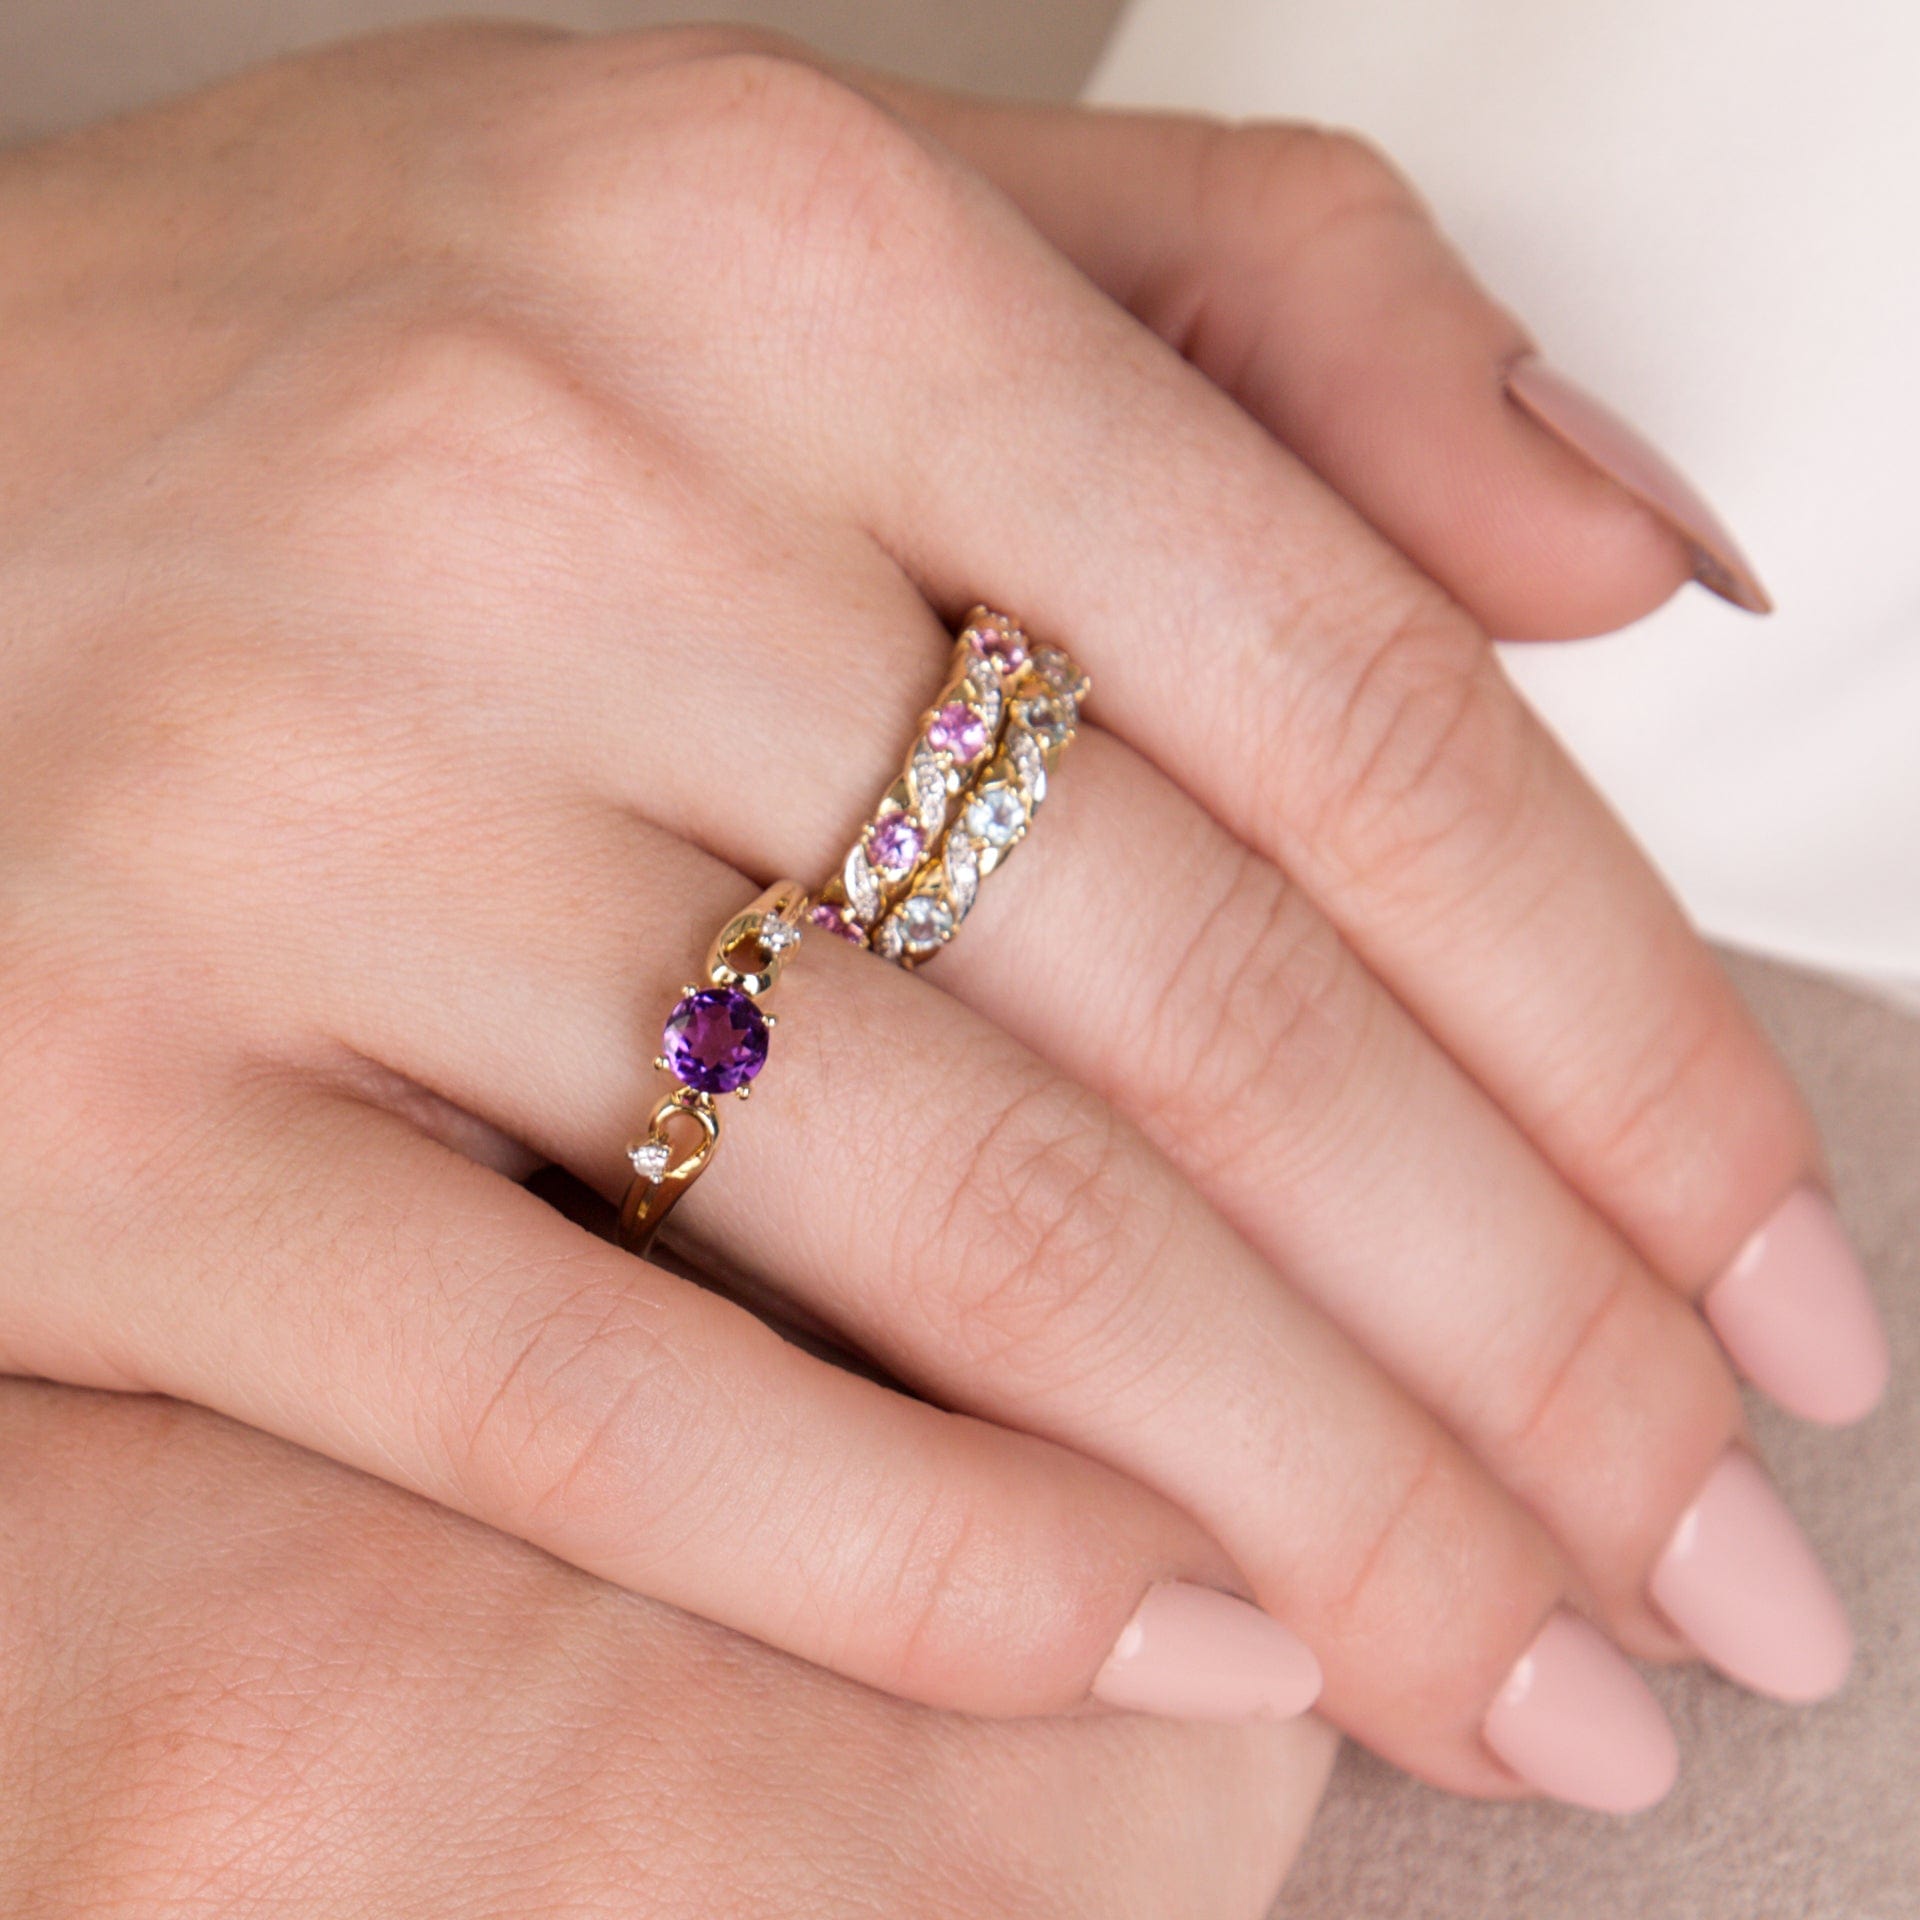 Classic Art Nouveau Style 9ct Yellow Gold Pink Sapphire & Diamond Half Eternity Ring on Model